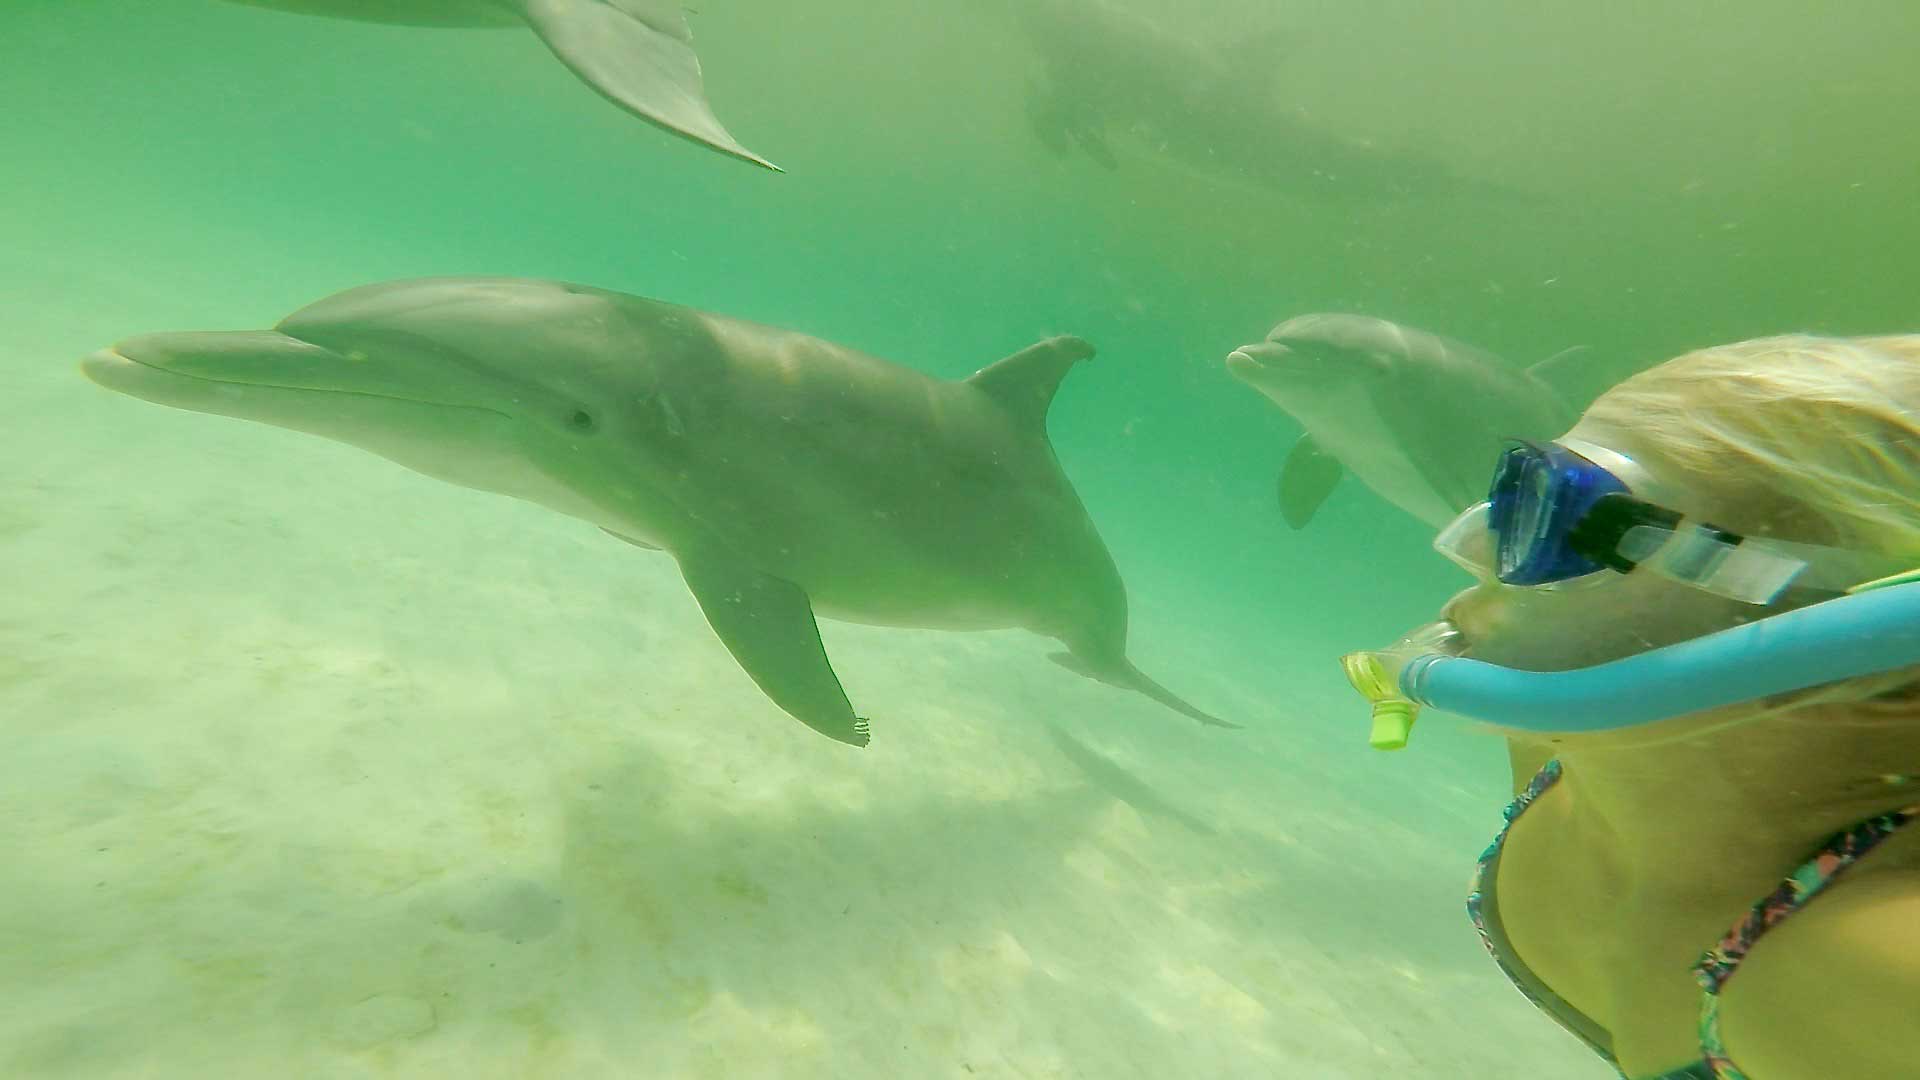 panama city beach dolphin tours & more reviews